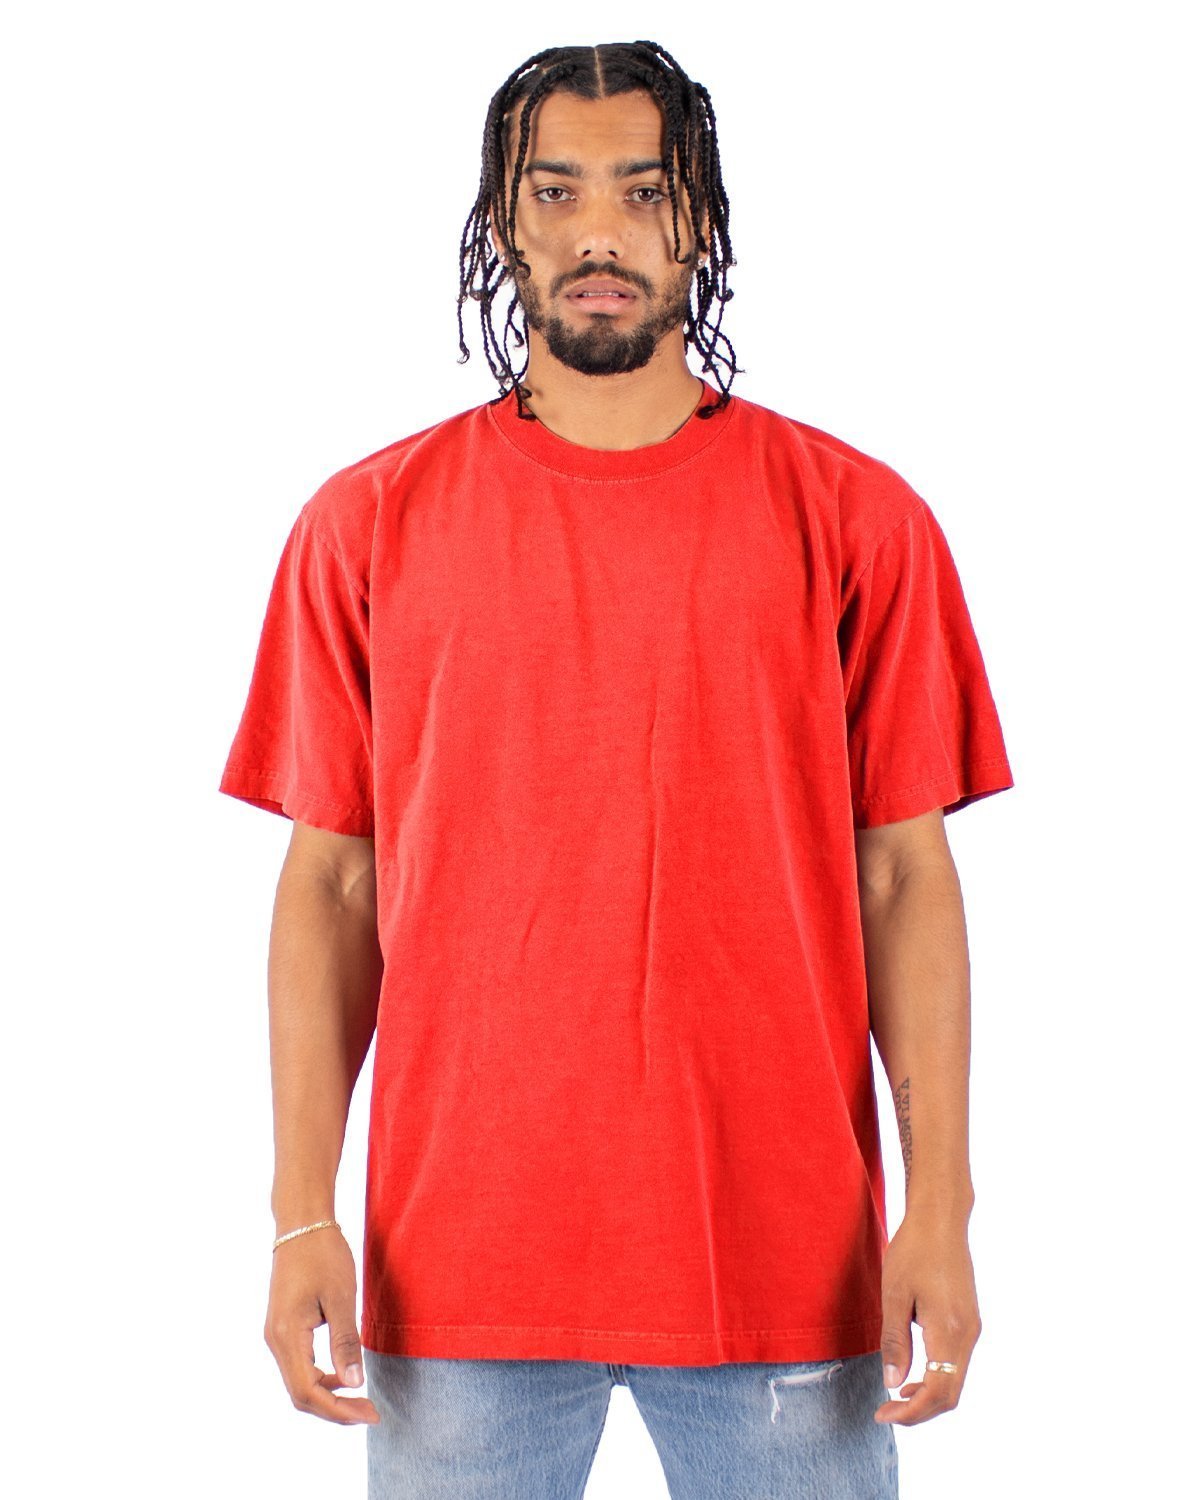 Max Heavyweight Garment Dye - Large Sizes 5XL / Cherry Tomato